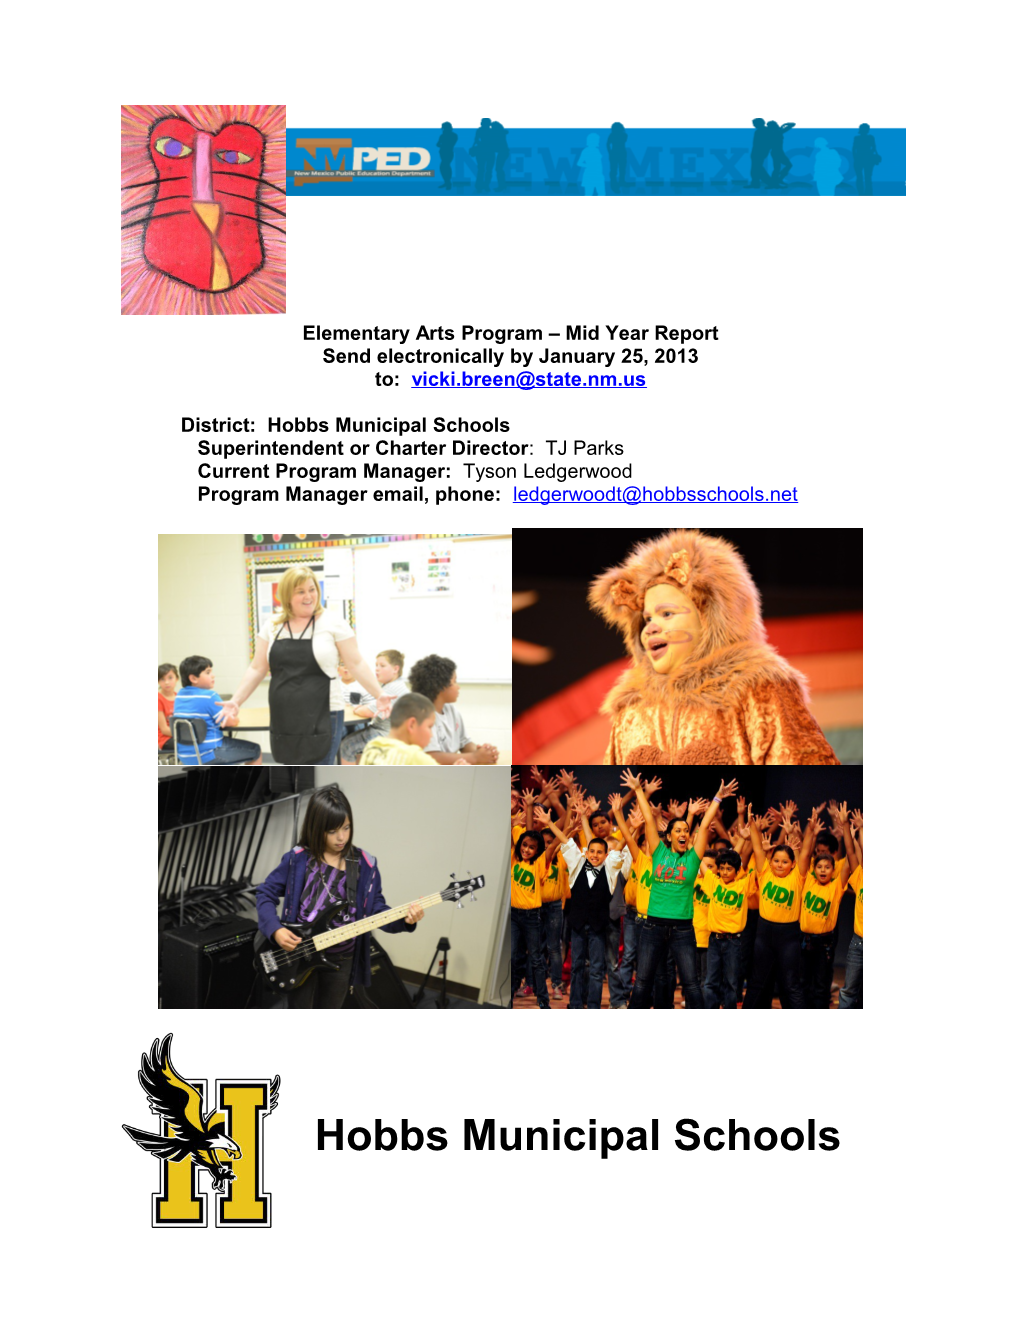 Hobbs Municipal Schools